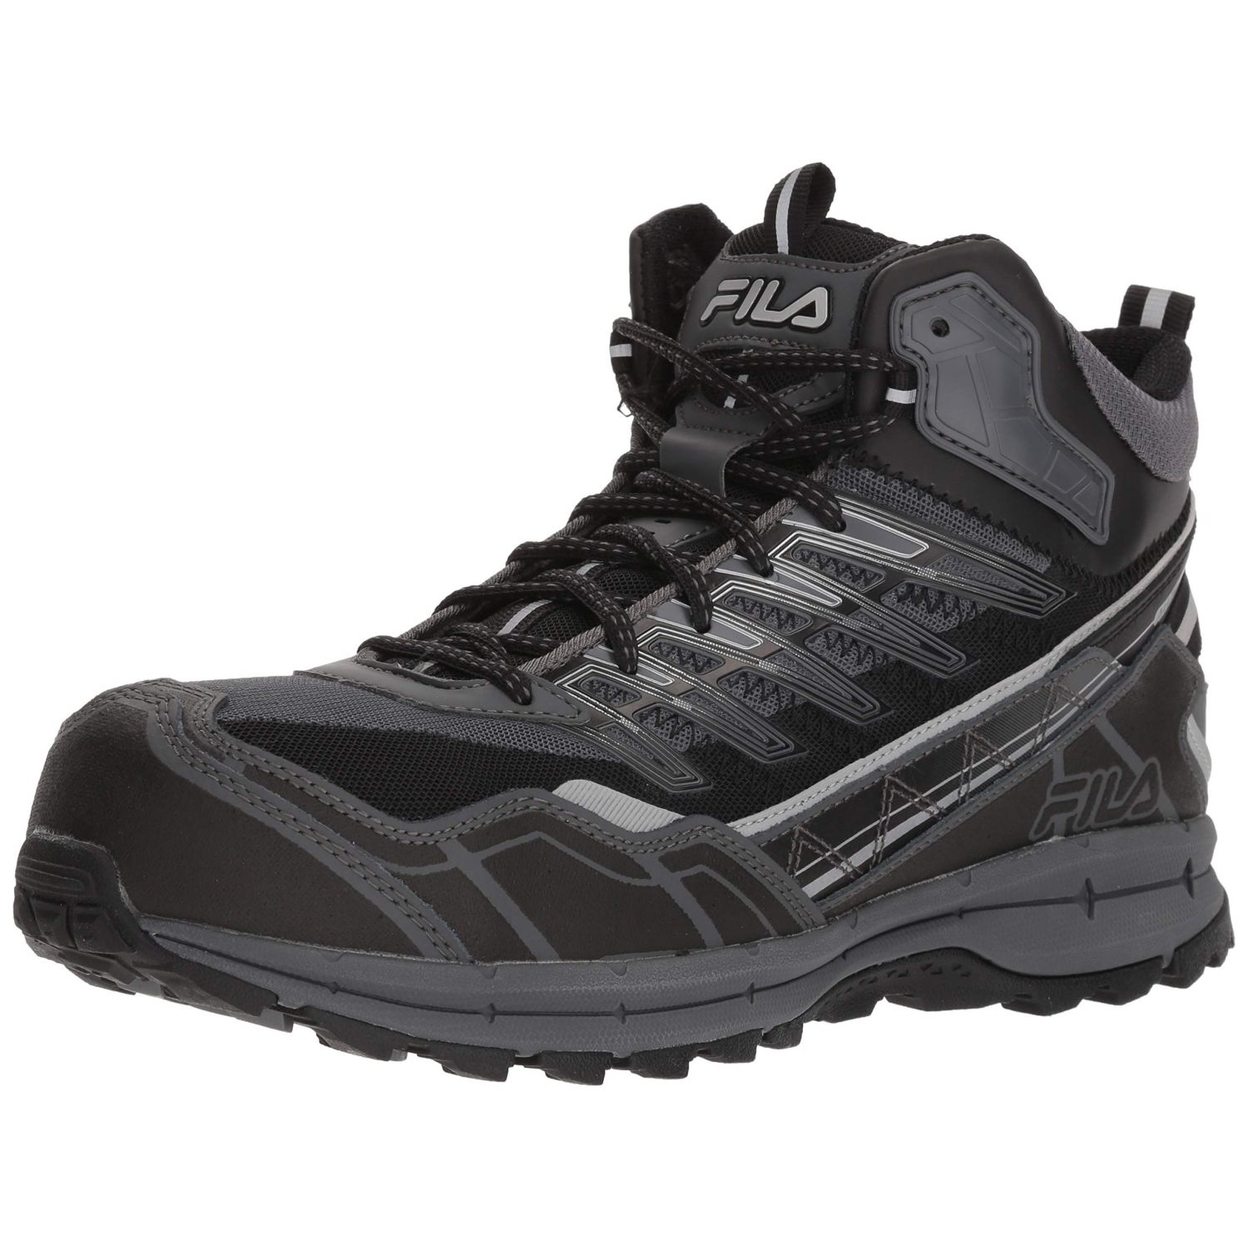 Fila Men's Hail Storm 3 Mid Composite Toe Trail Work Shoes Ct CSRK/BLK/MSIL - CSRK/BLK/MSIL, 11.5